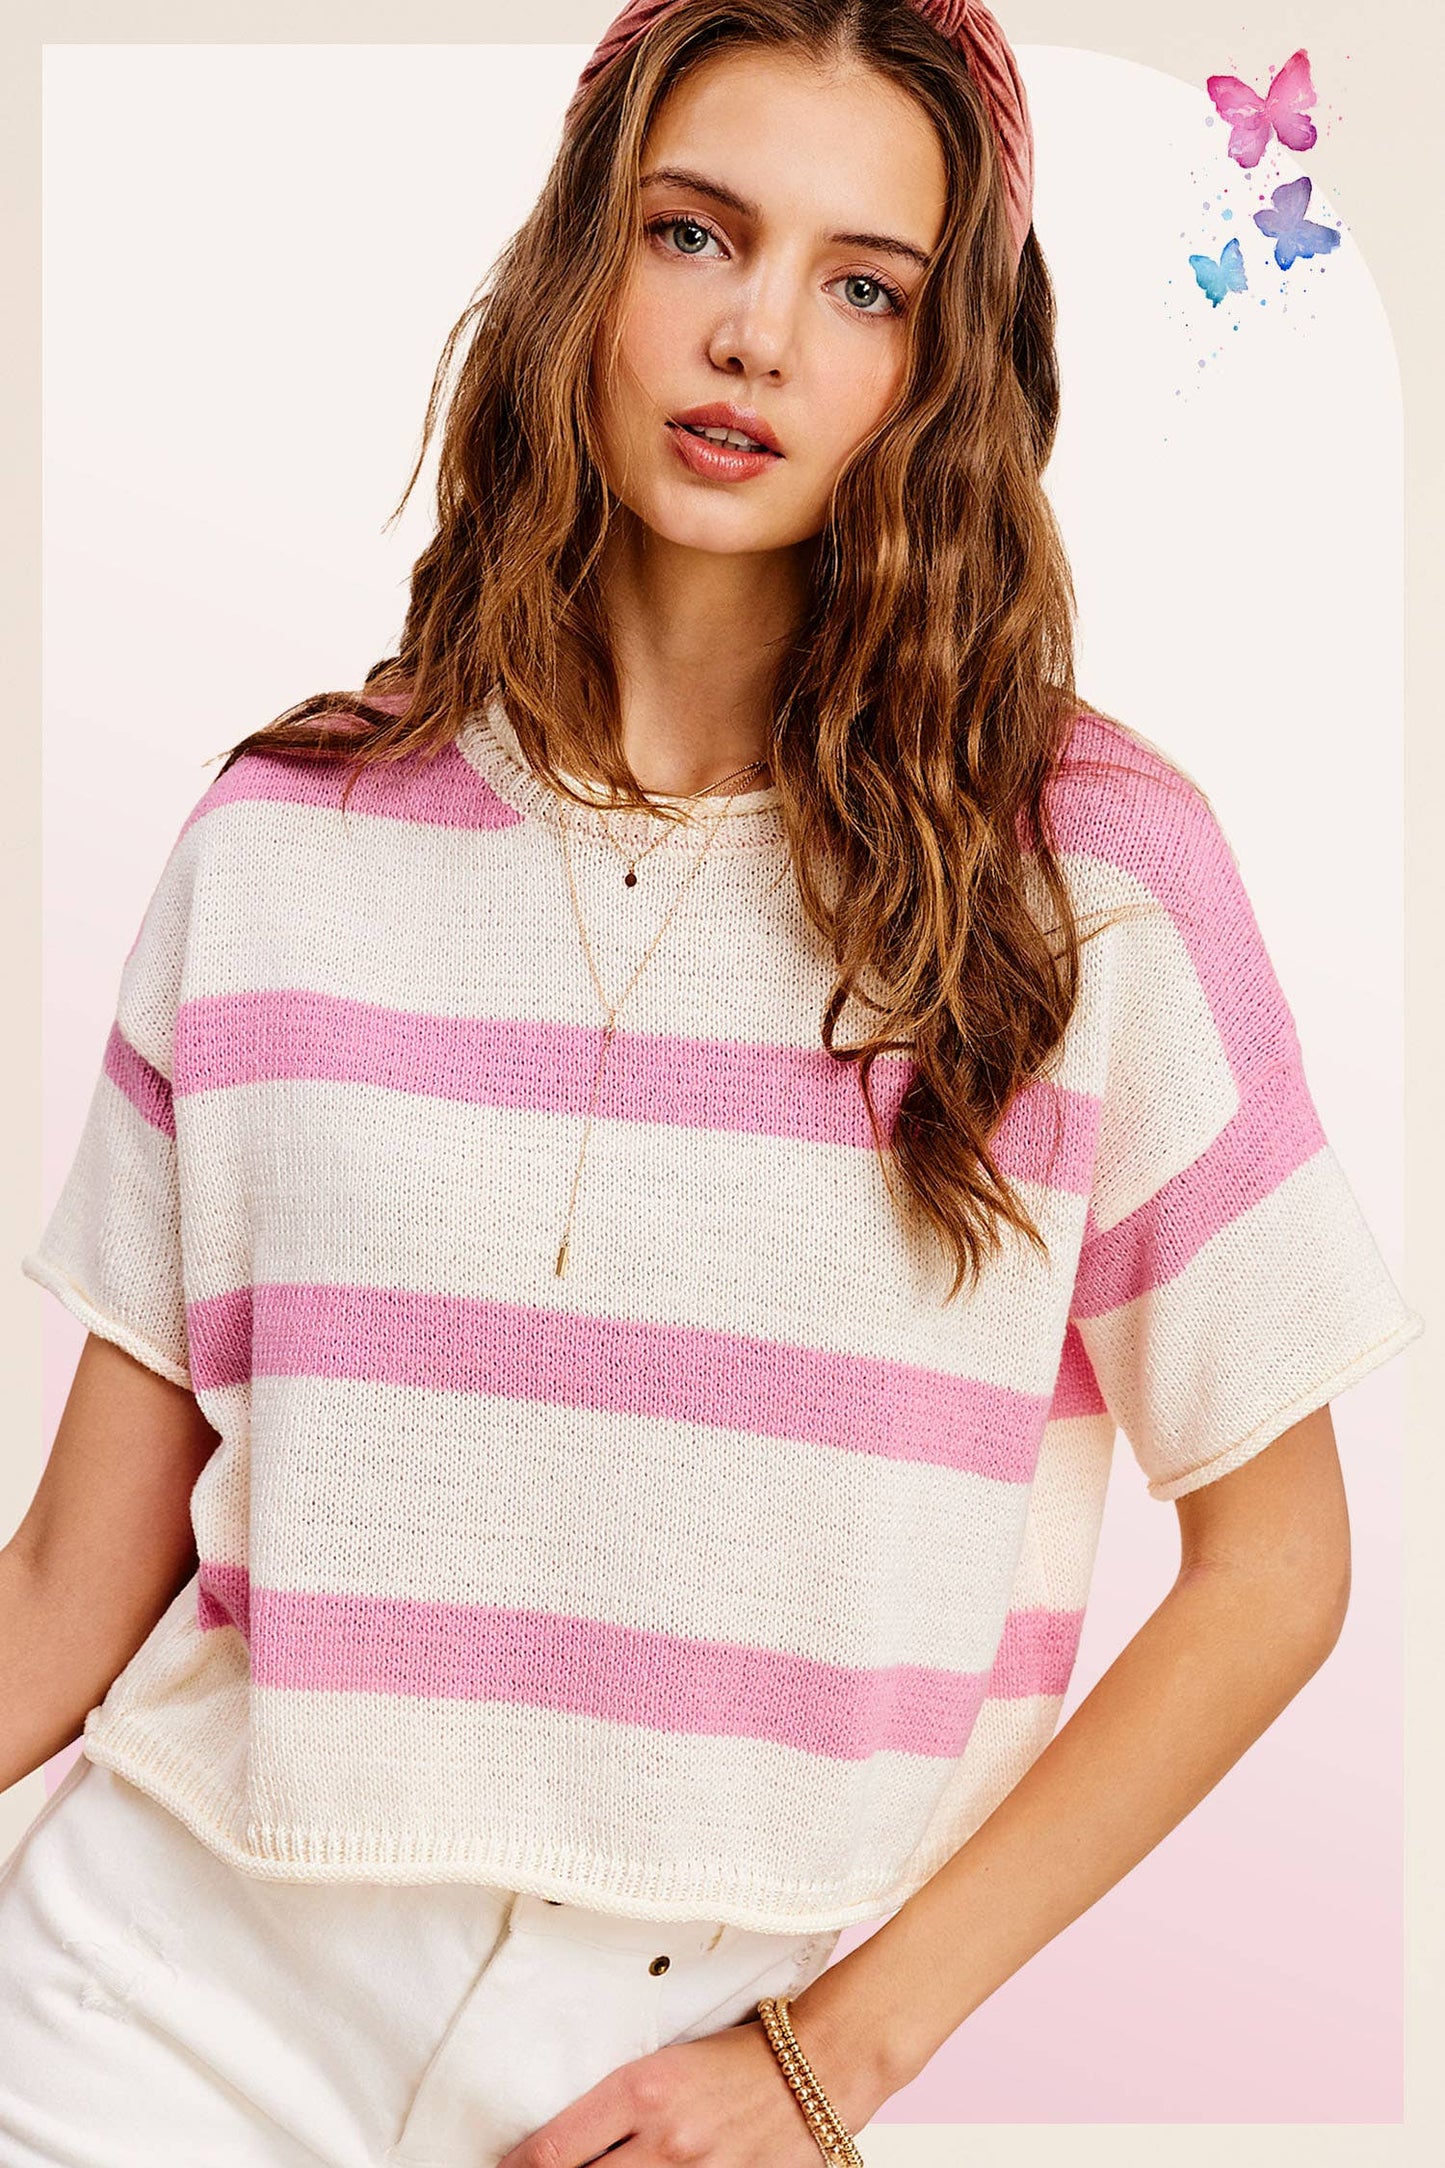 Danielle Boxy Stripe Lightweight Sweater Top: Candy Pink